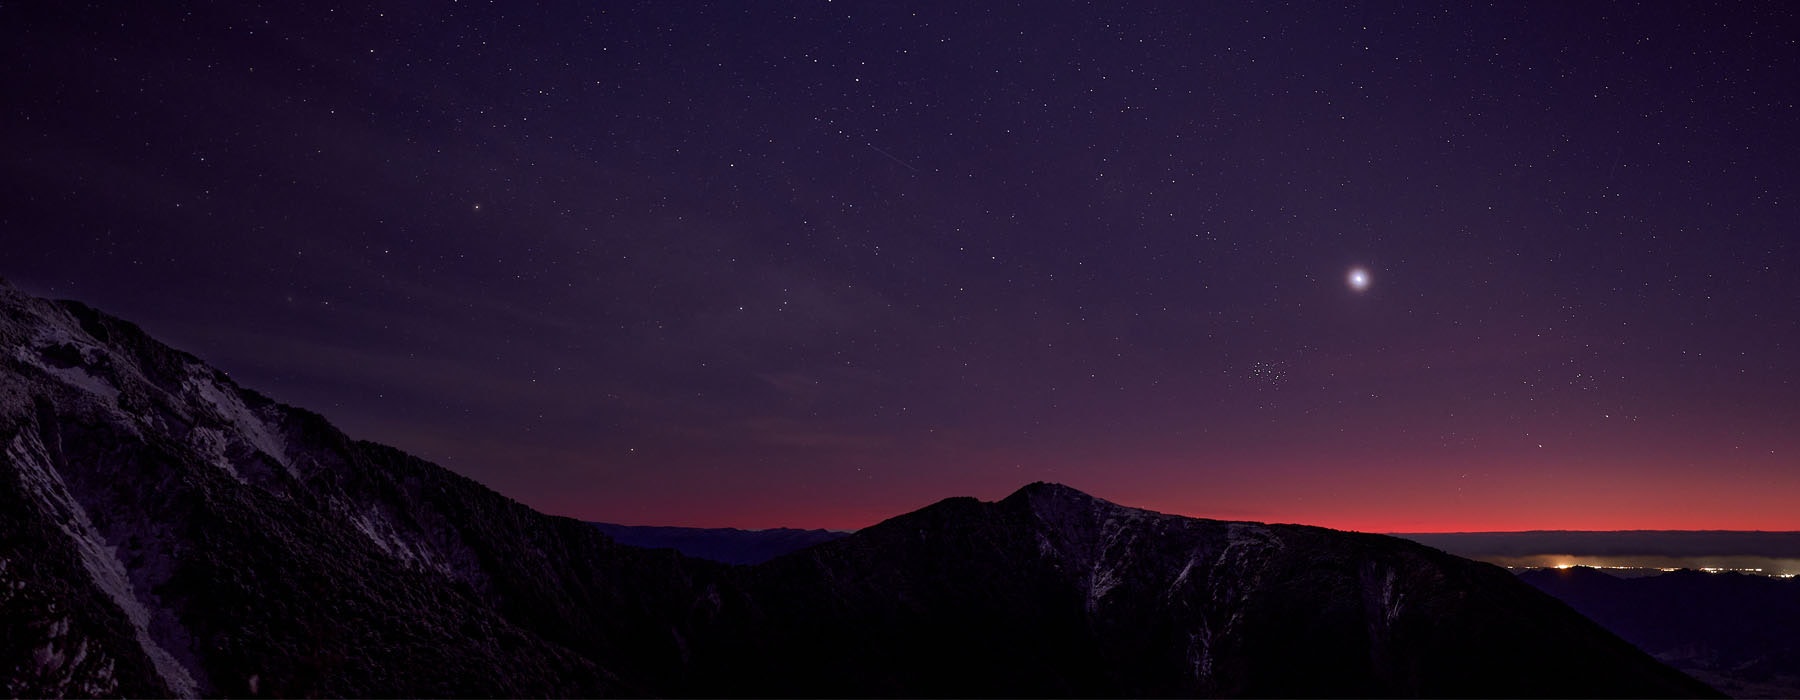 View of the Matariki star cluster at sunrise in a dark night sky